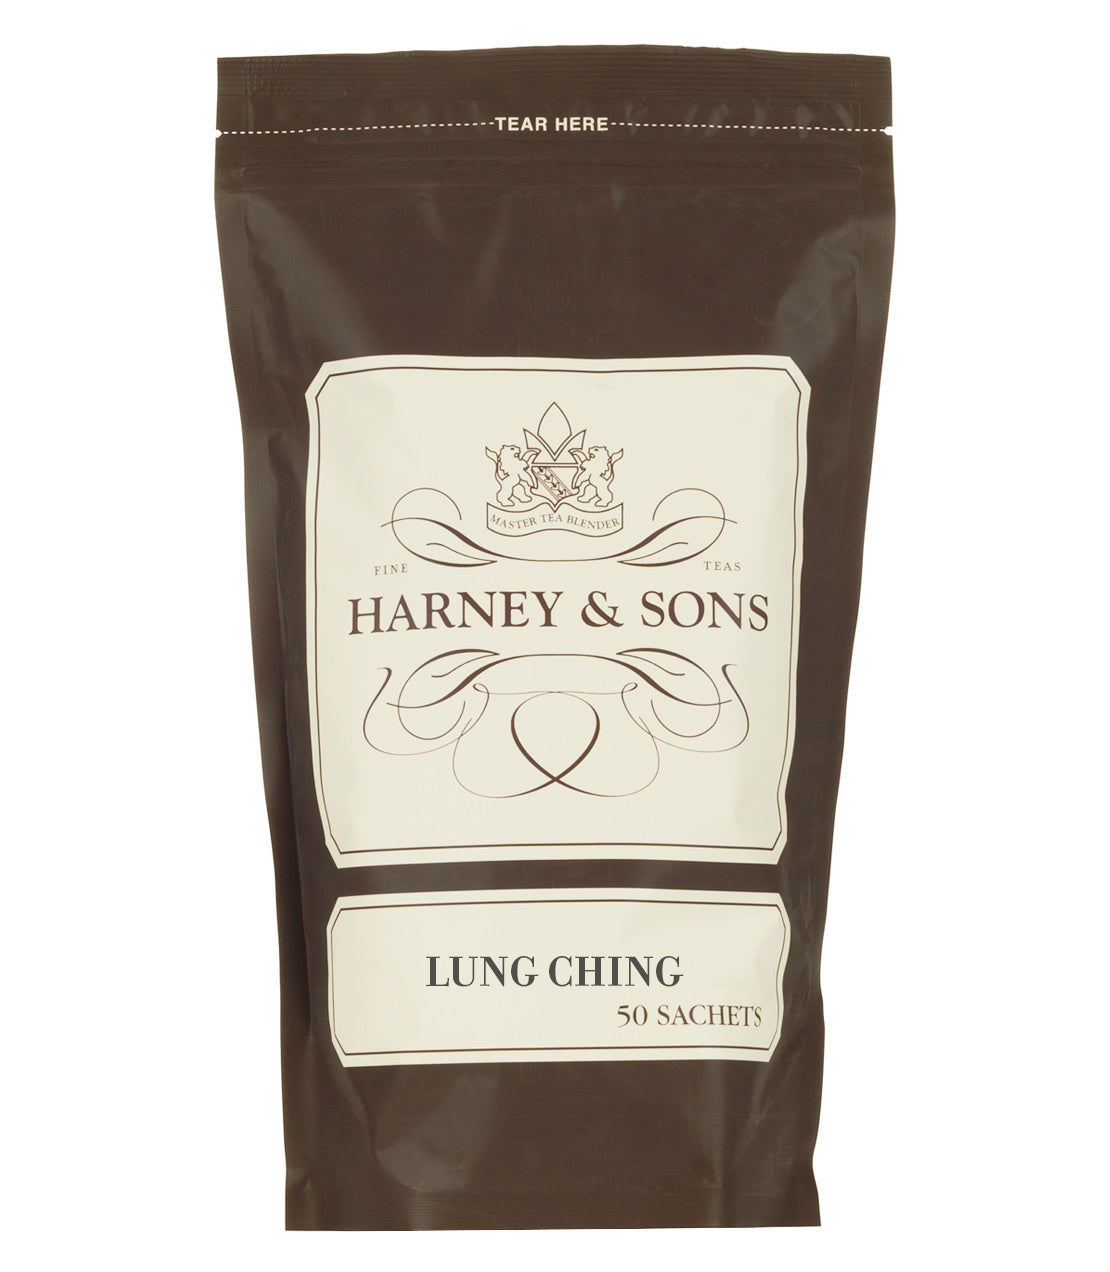 Lung Ching - Sachets Bag of 50 Sachets - Harney & Sons Fine Teas